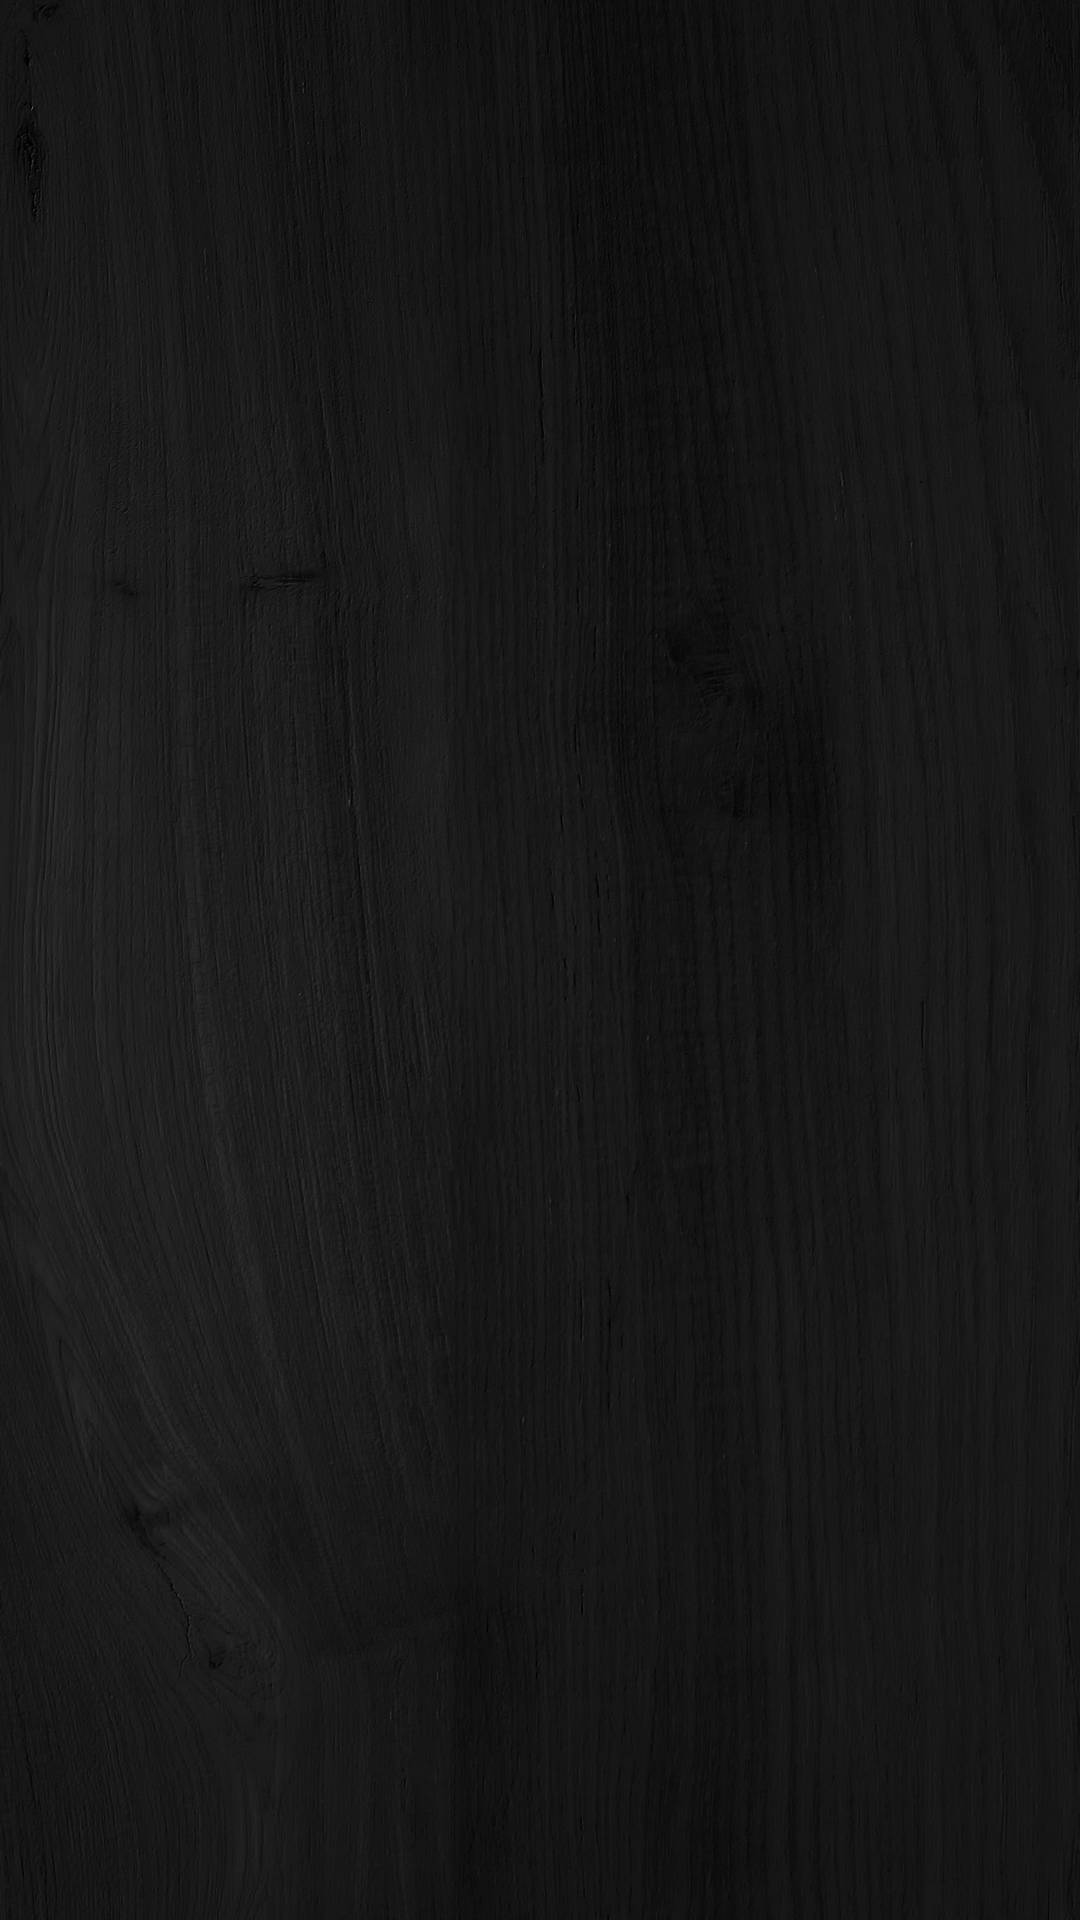 Panelde Madera Oscura En La Pared. Fondo de pantalla